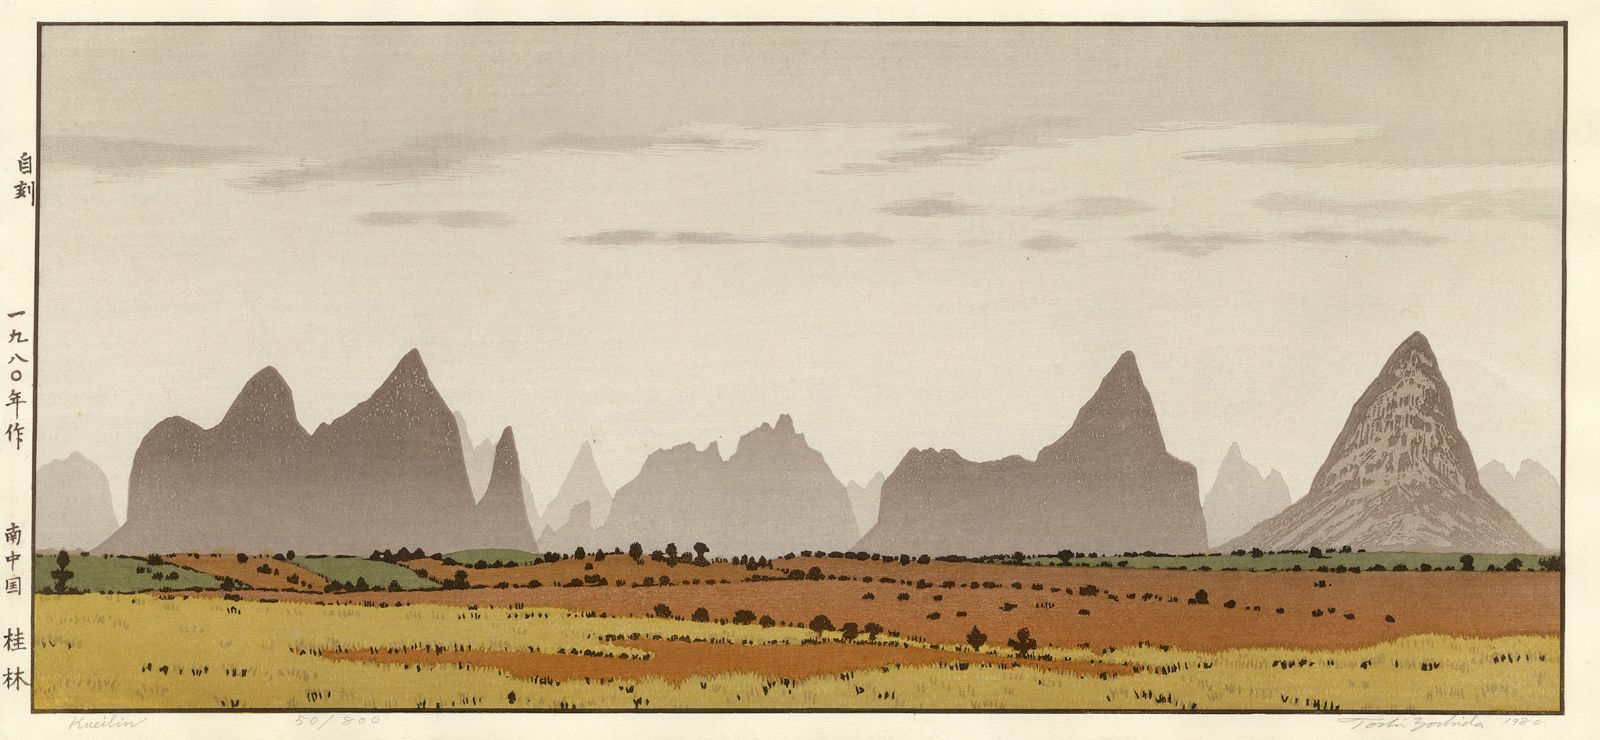 Toshi Yoshida “Kueilin” 1980 woodblock print